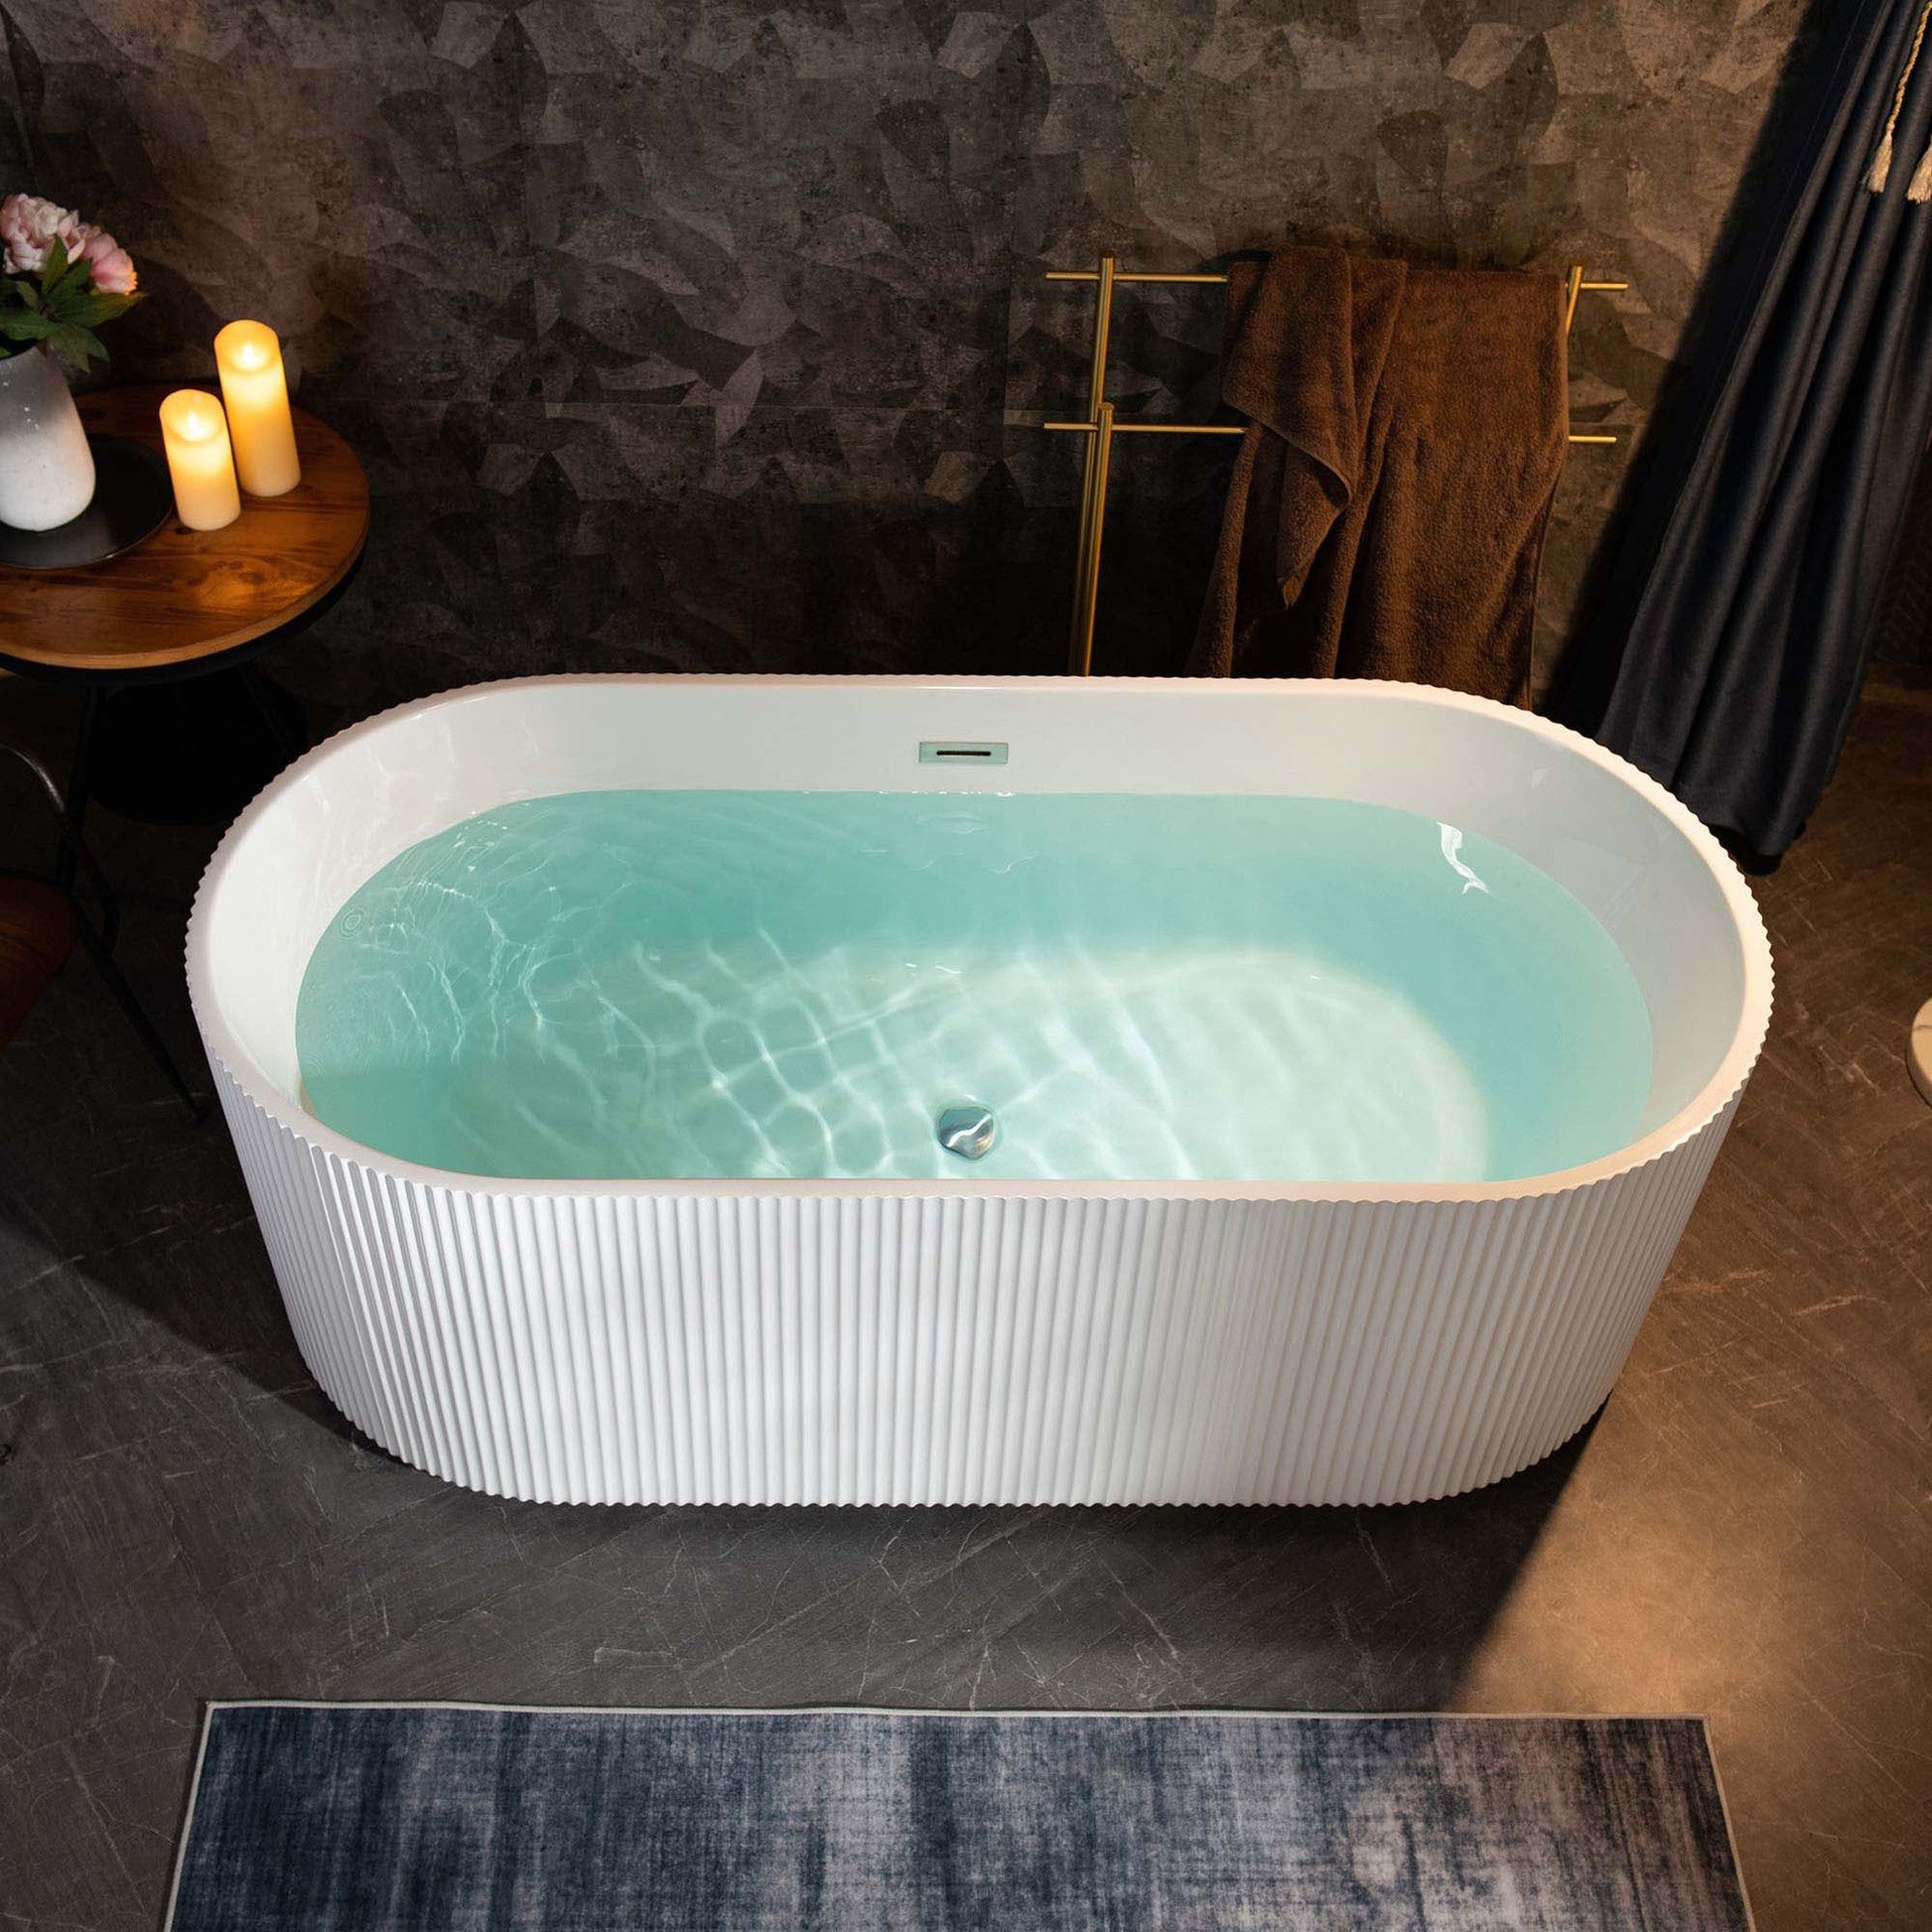 WoodBridge BTA1526 67" White Acrylic Freestanding Contemporary Soaking Bathtub With Chrome Overflow and Drain